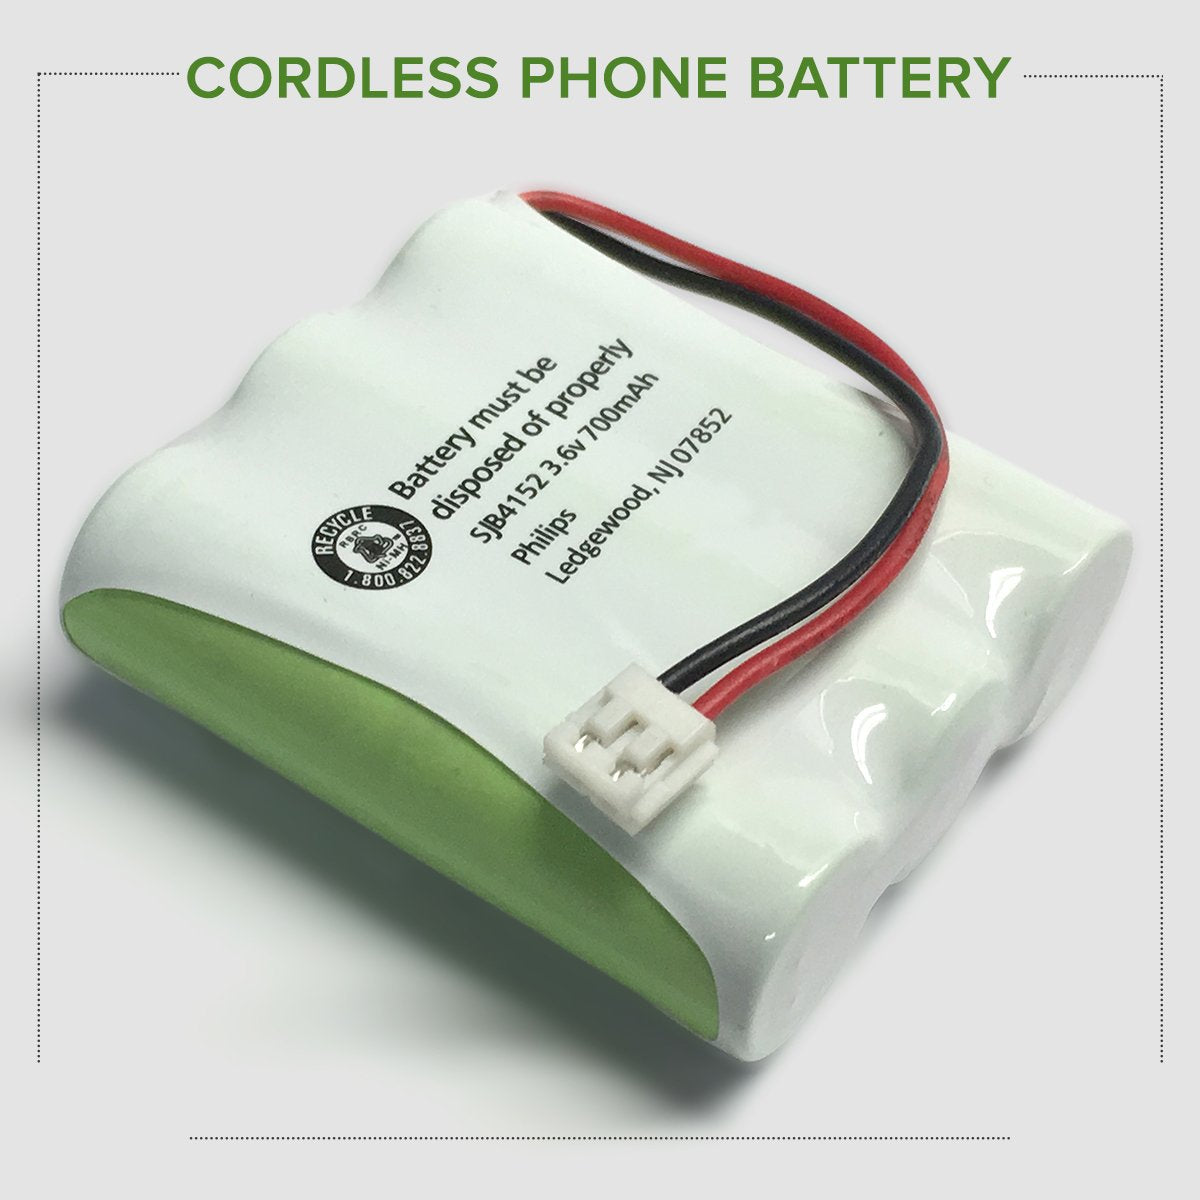 GE 2-5880 Cordless Phone Battery